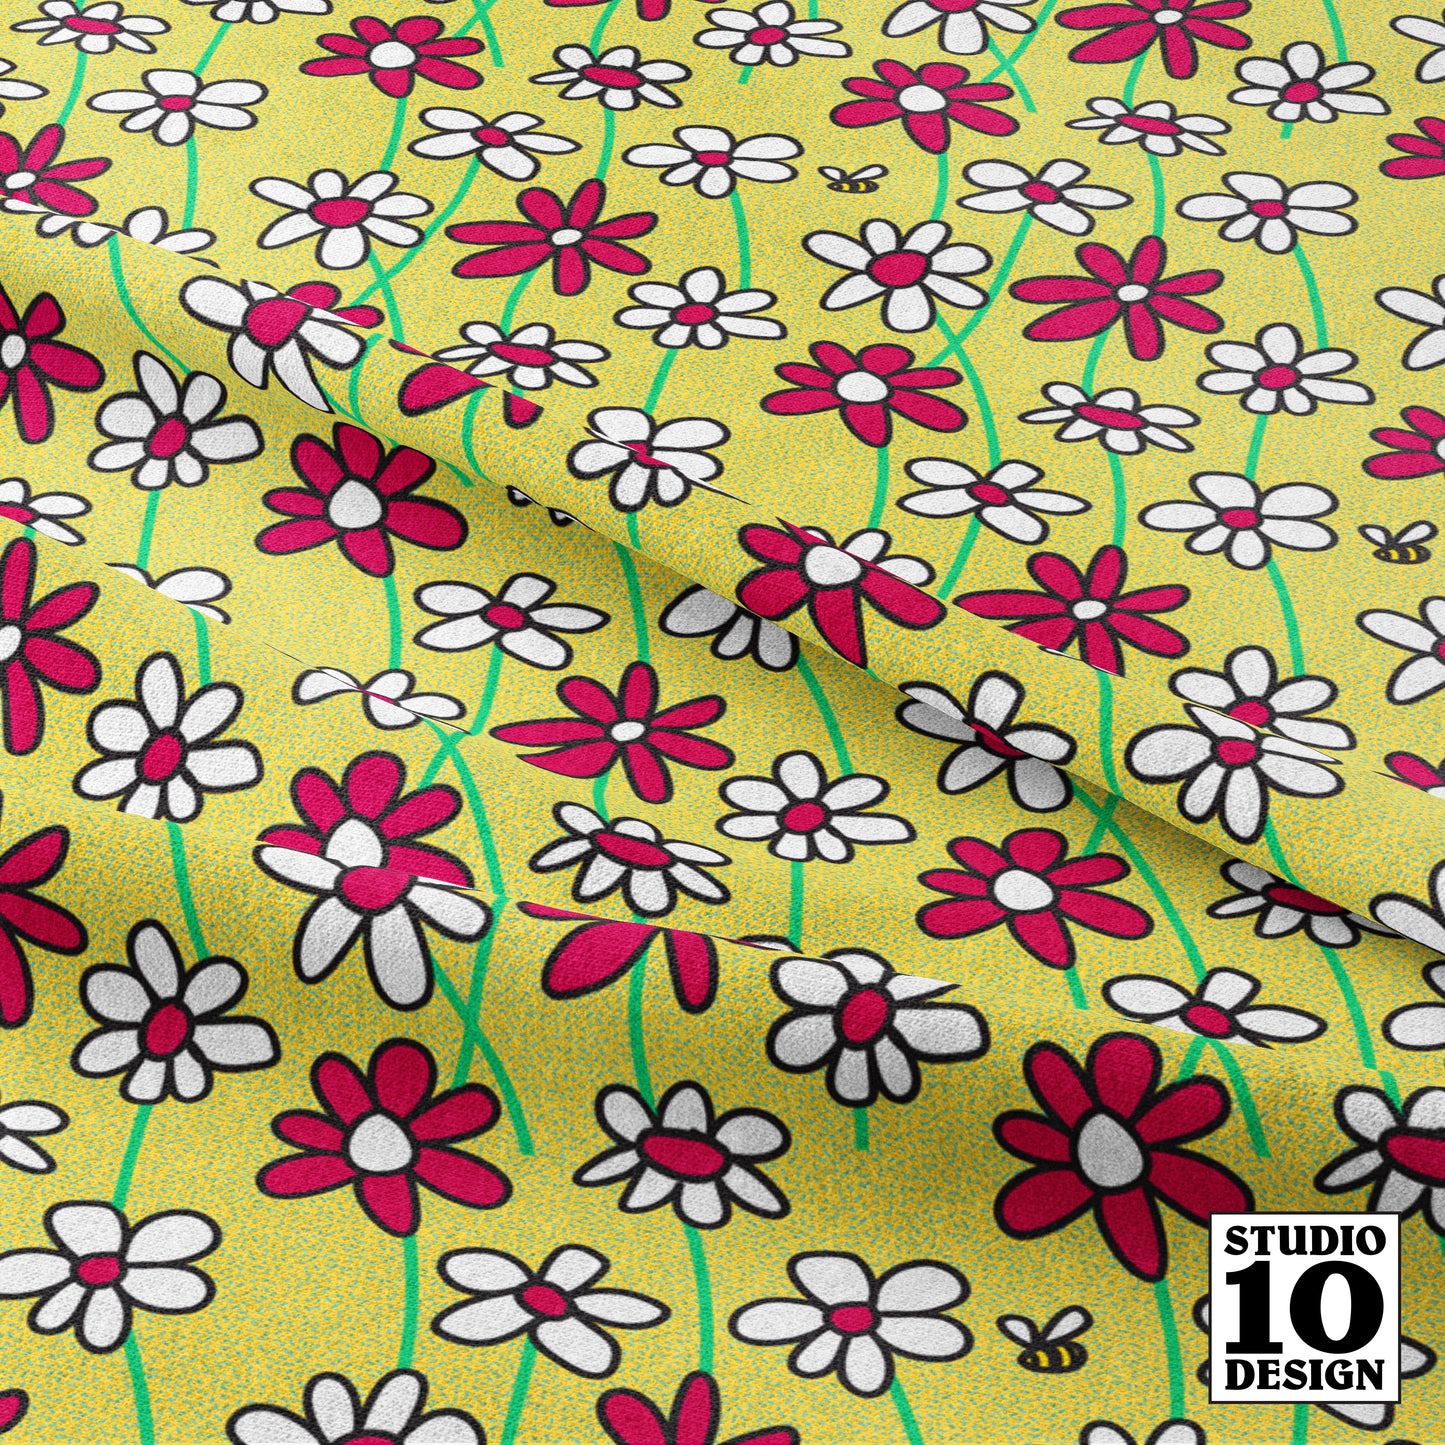 Flower Pop! Daisies Printed Fabric by Studio Ten Design